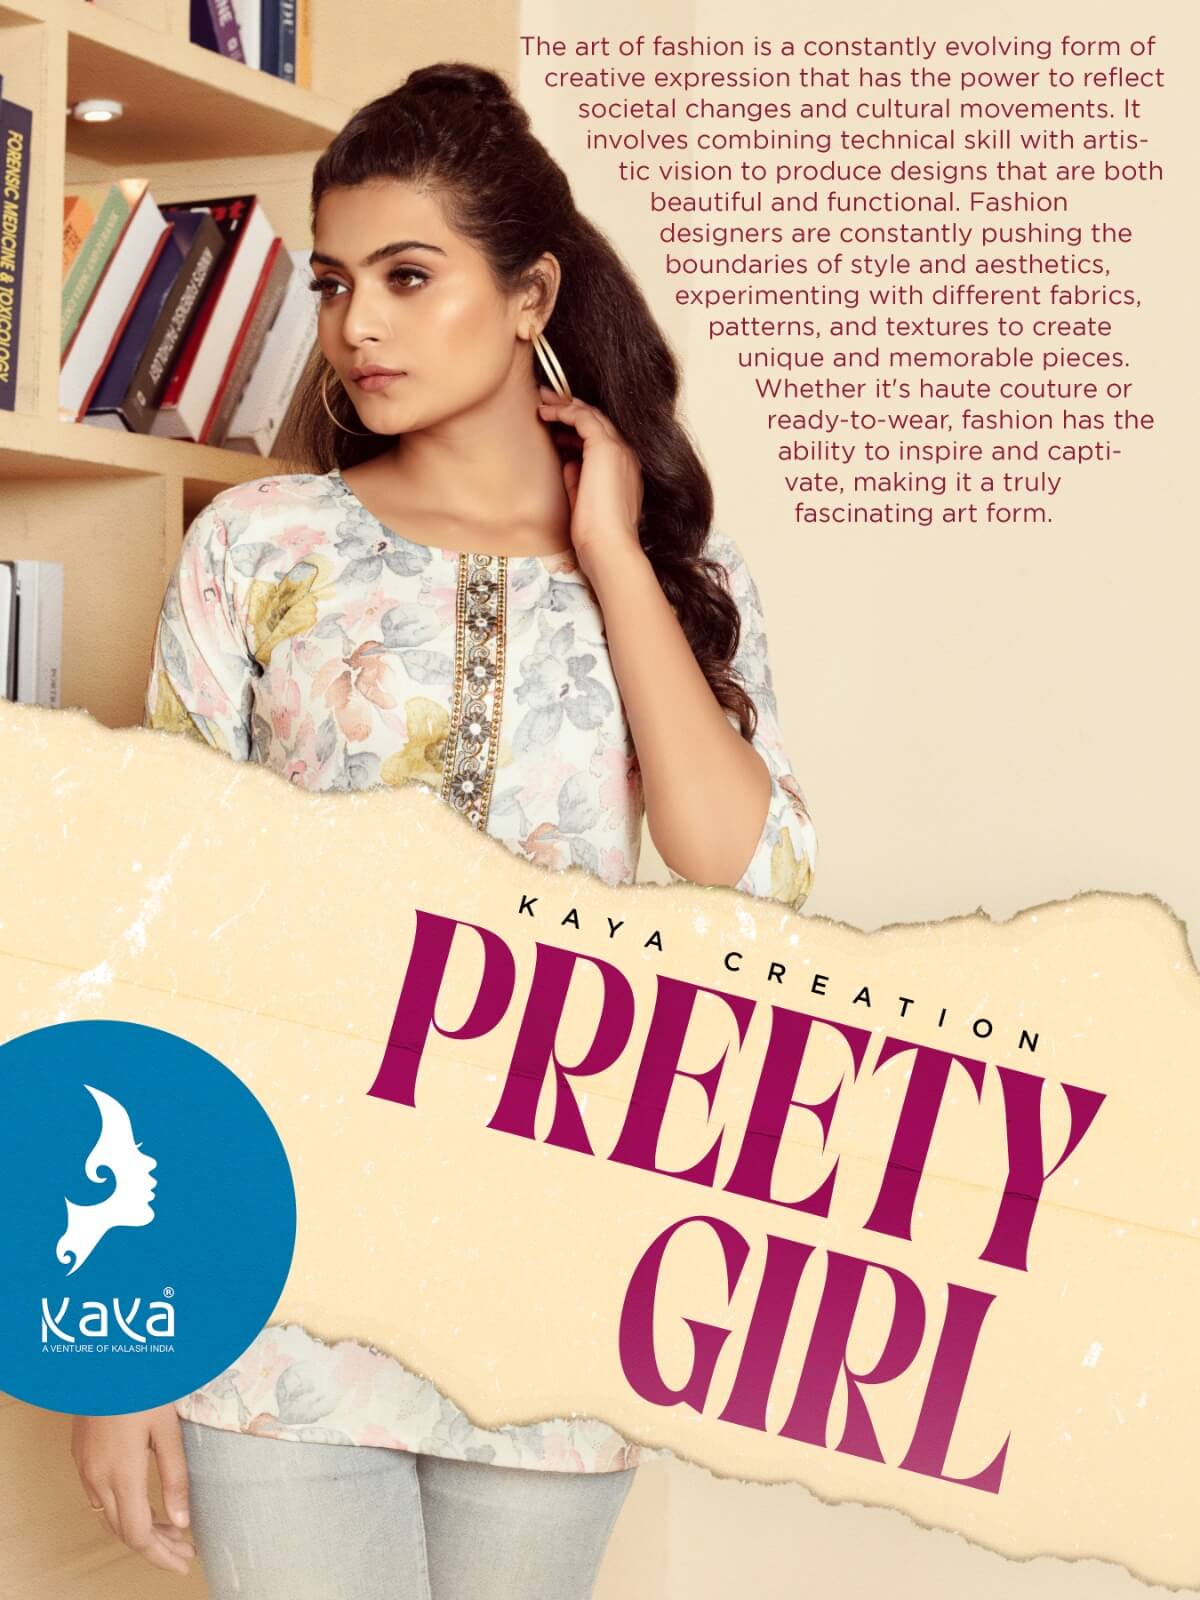 Kaya Preety Girl Ladies Top Catalog collection 1